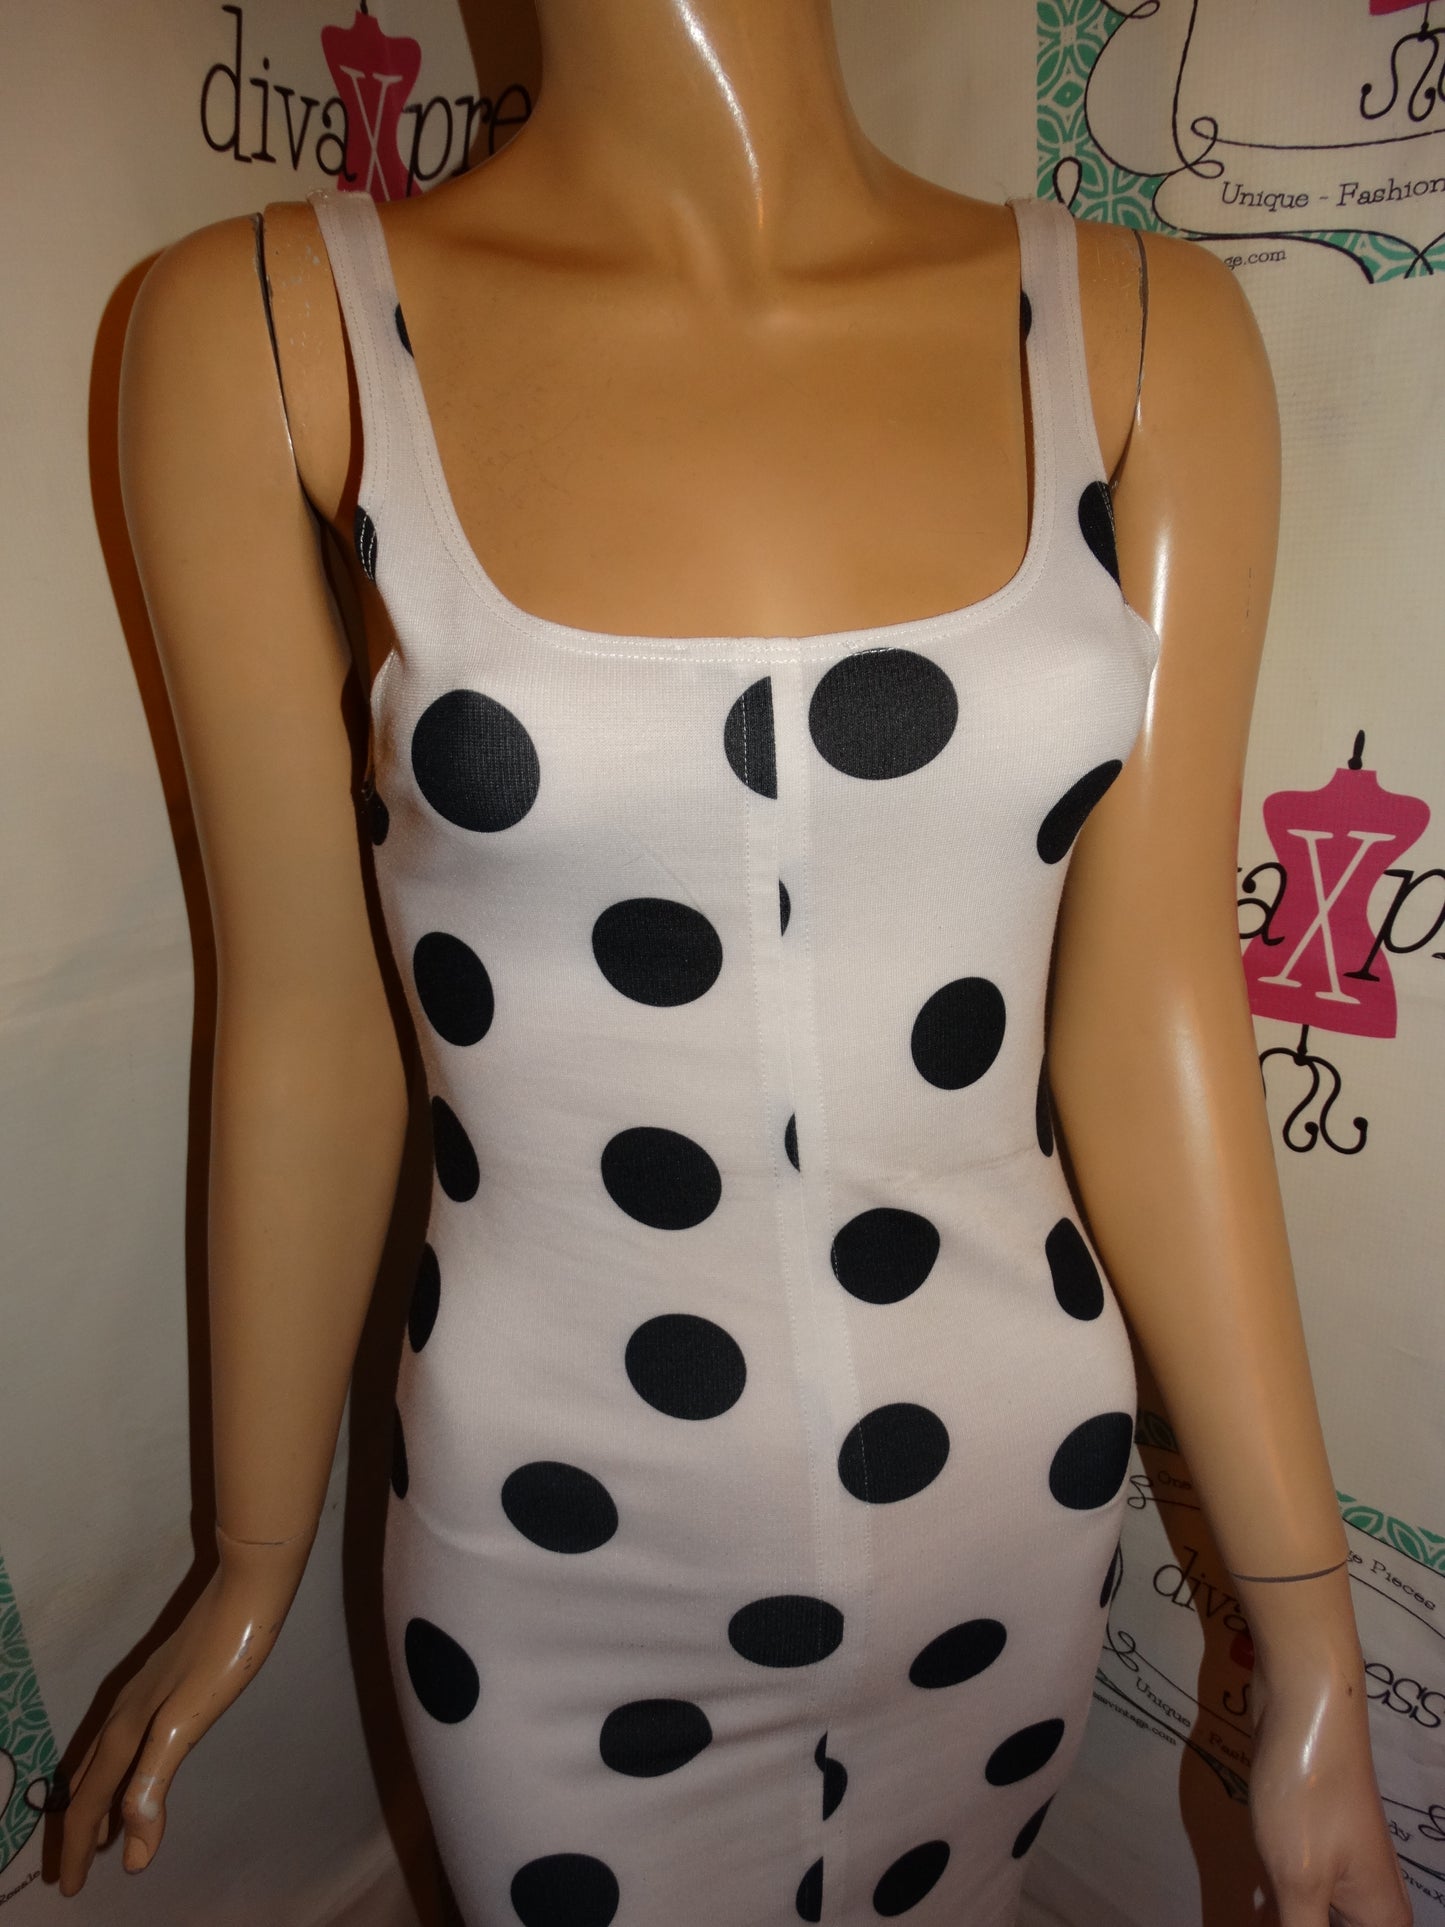 Zara White/Black Polka Dress Size S